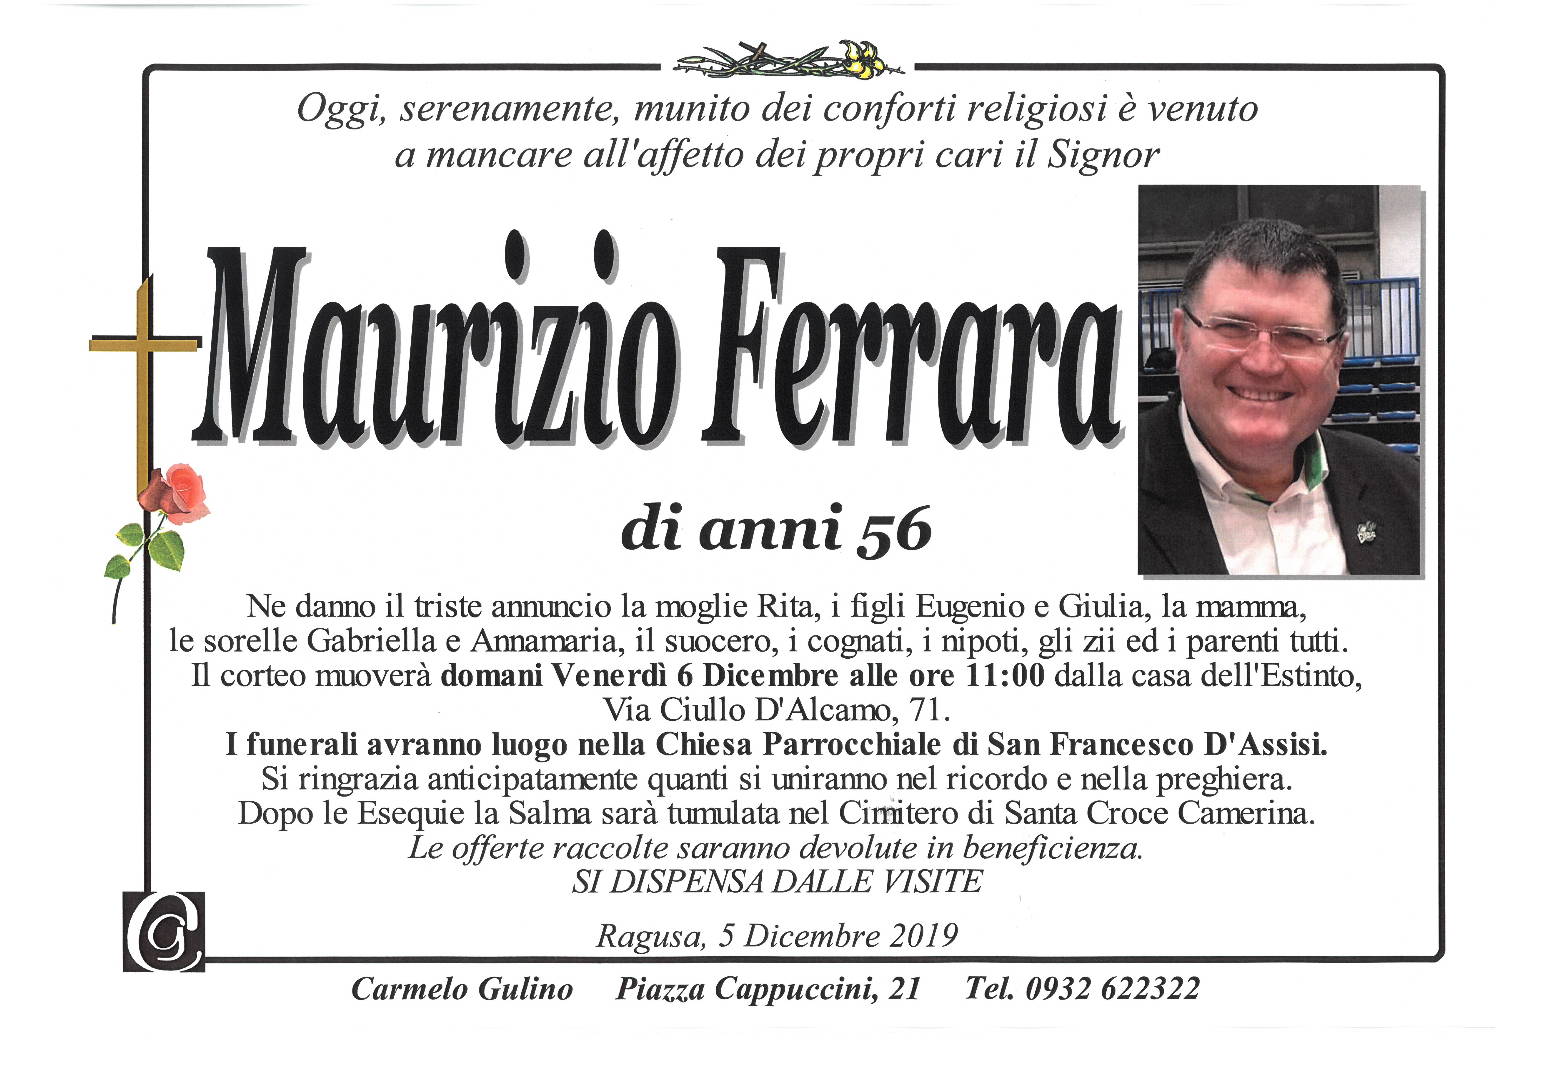 Maurizio Ferrara